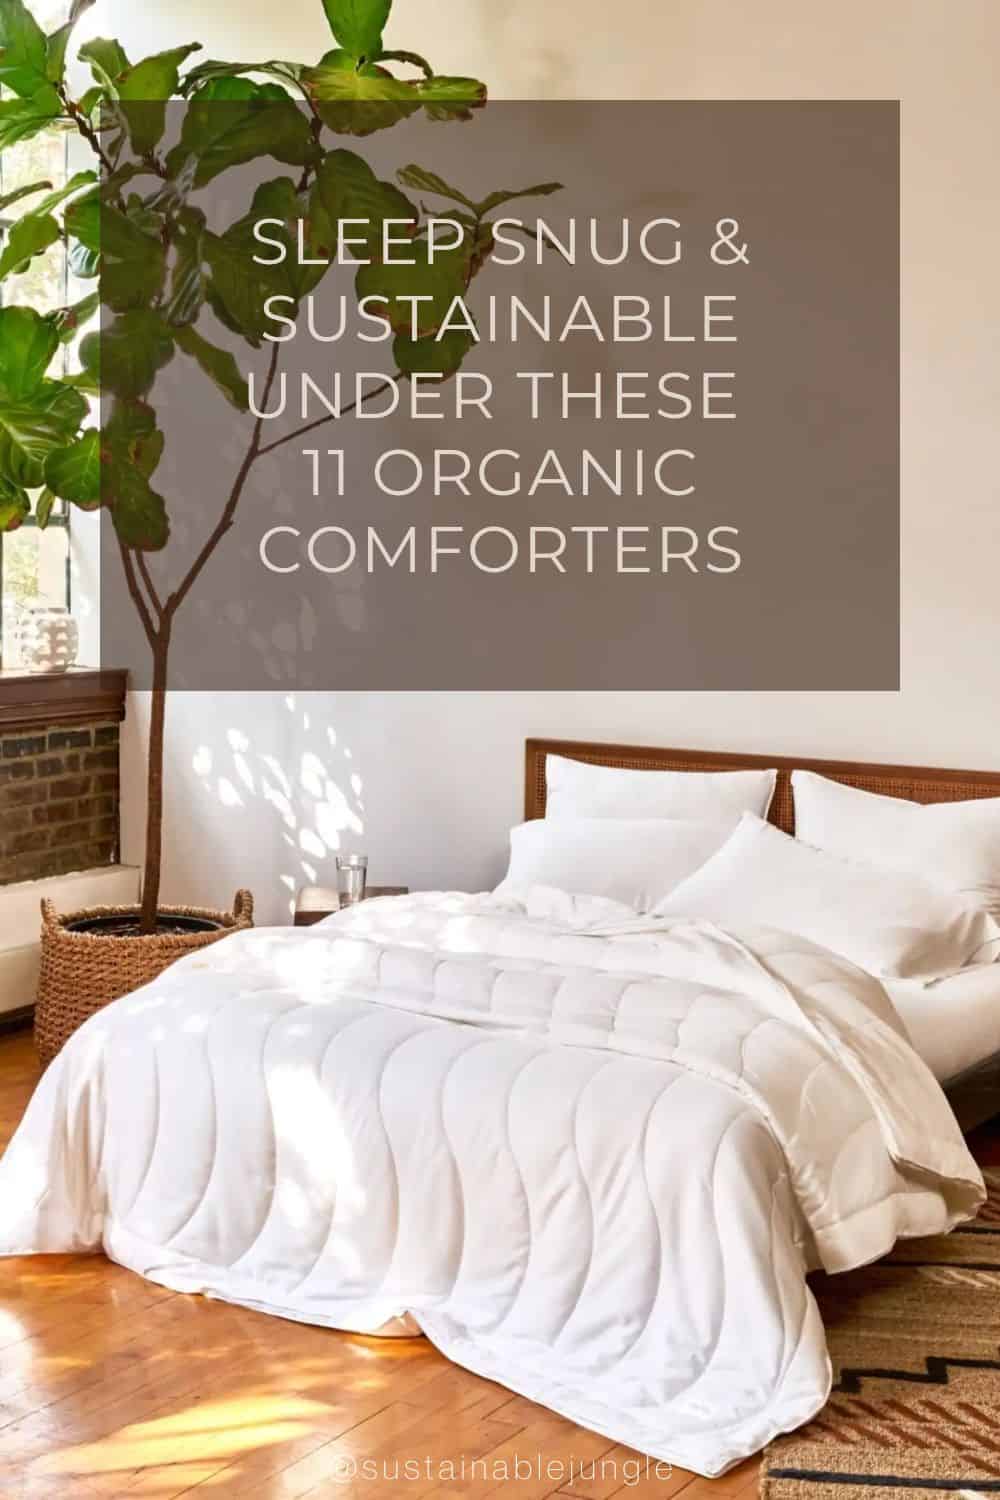 Sleep Snug & Sustainable Under These 11 Organic Comforters Image by Buffy #organiccomforters #organiccomfortersets #sustainablecomforters #sustainablebedcomforters #bestorganiccomforter #sustainablejungle